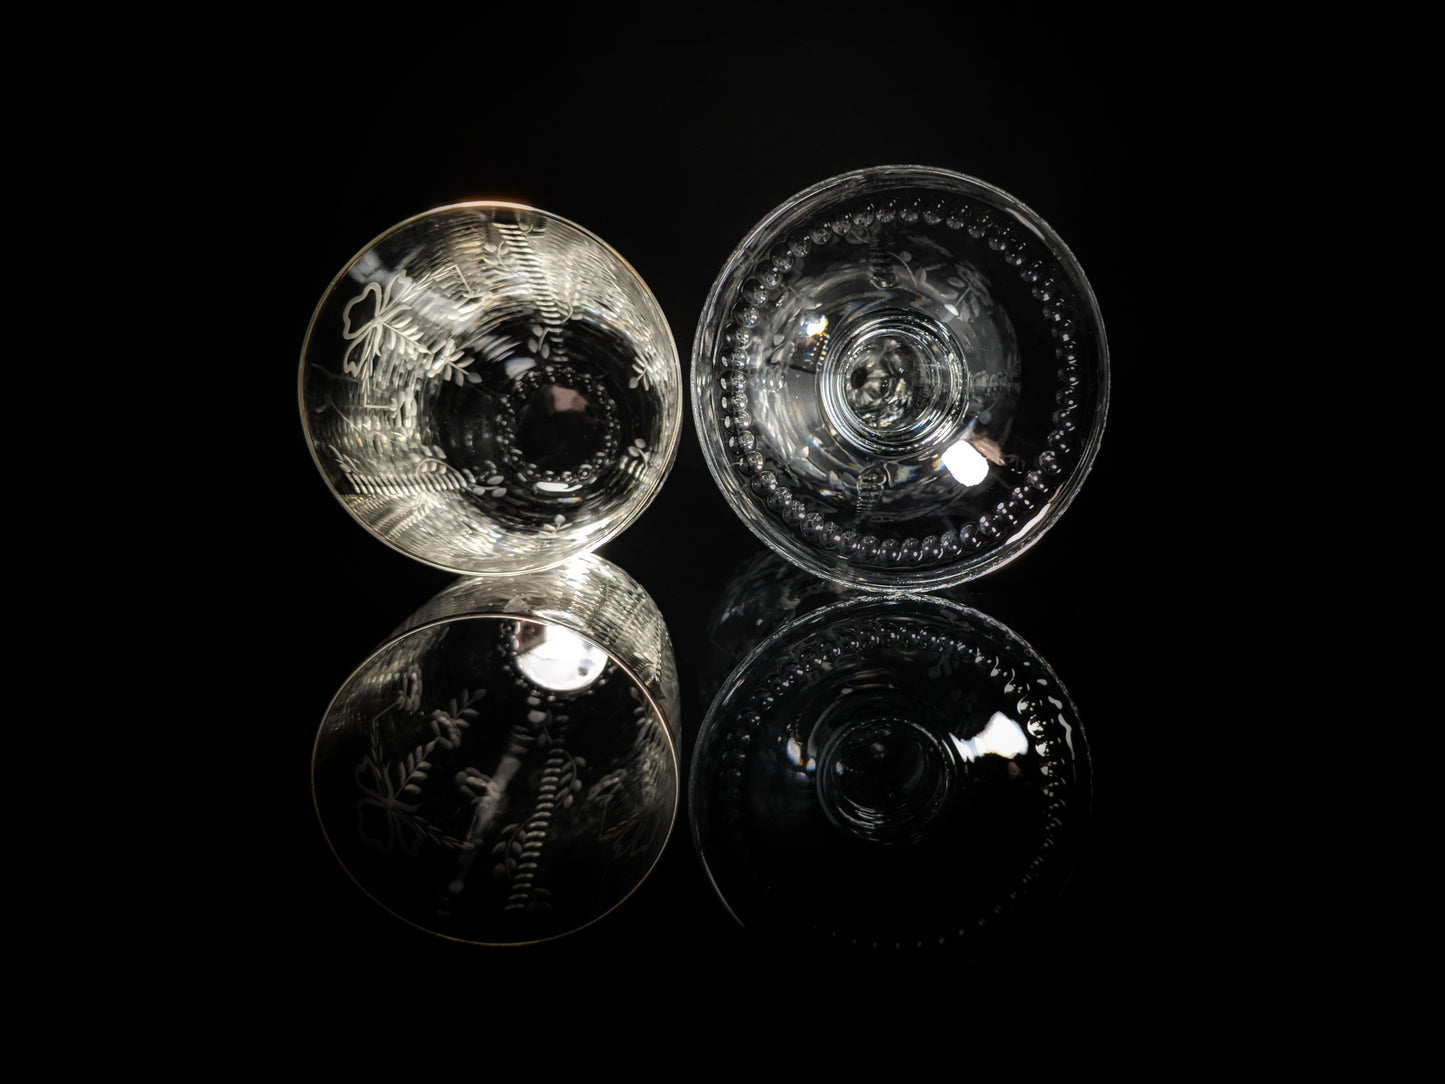 Faberge Crystal Gatchina Palace Carafe Decanter with matching glass NIB